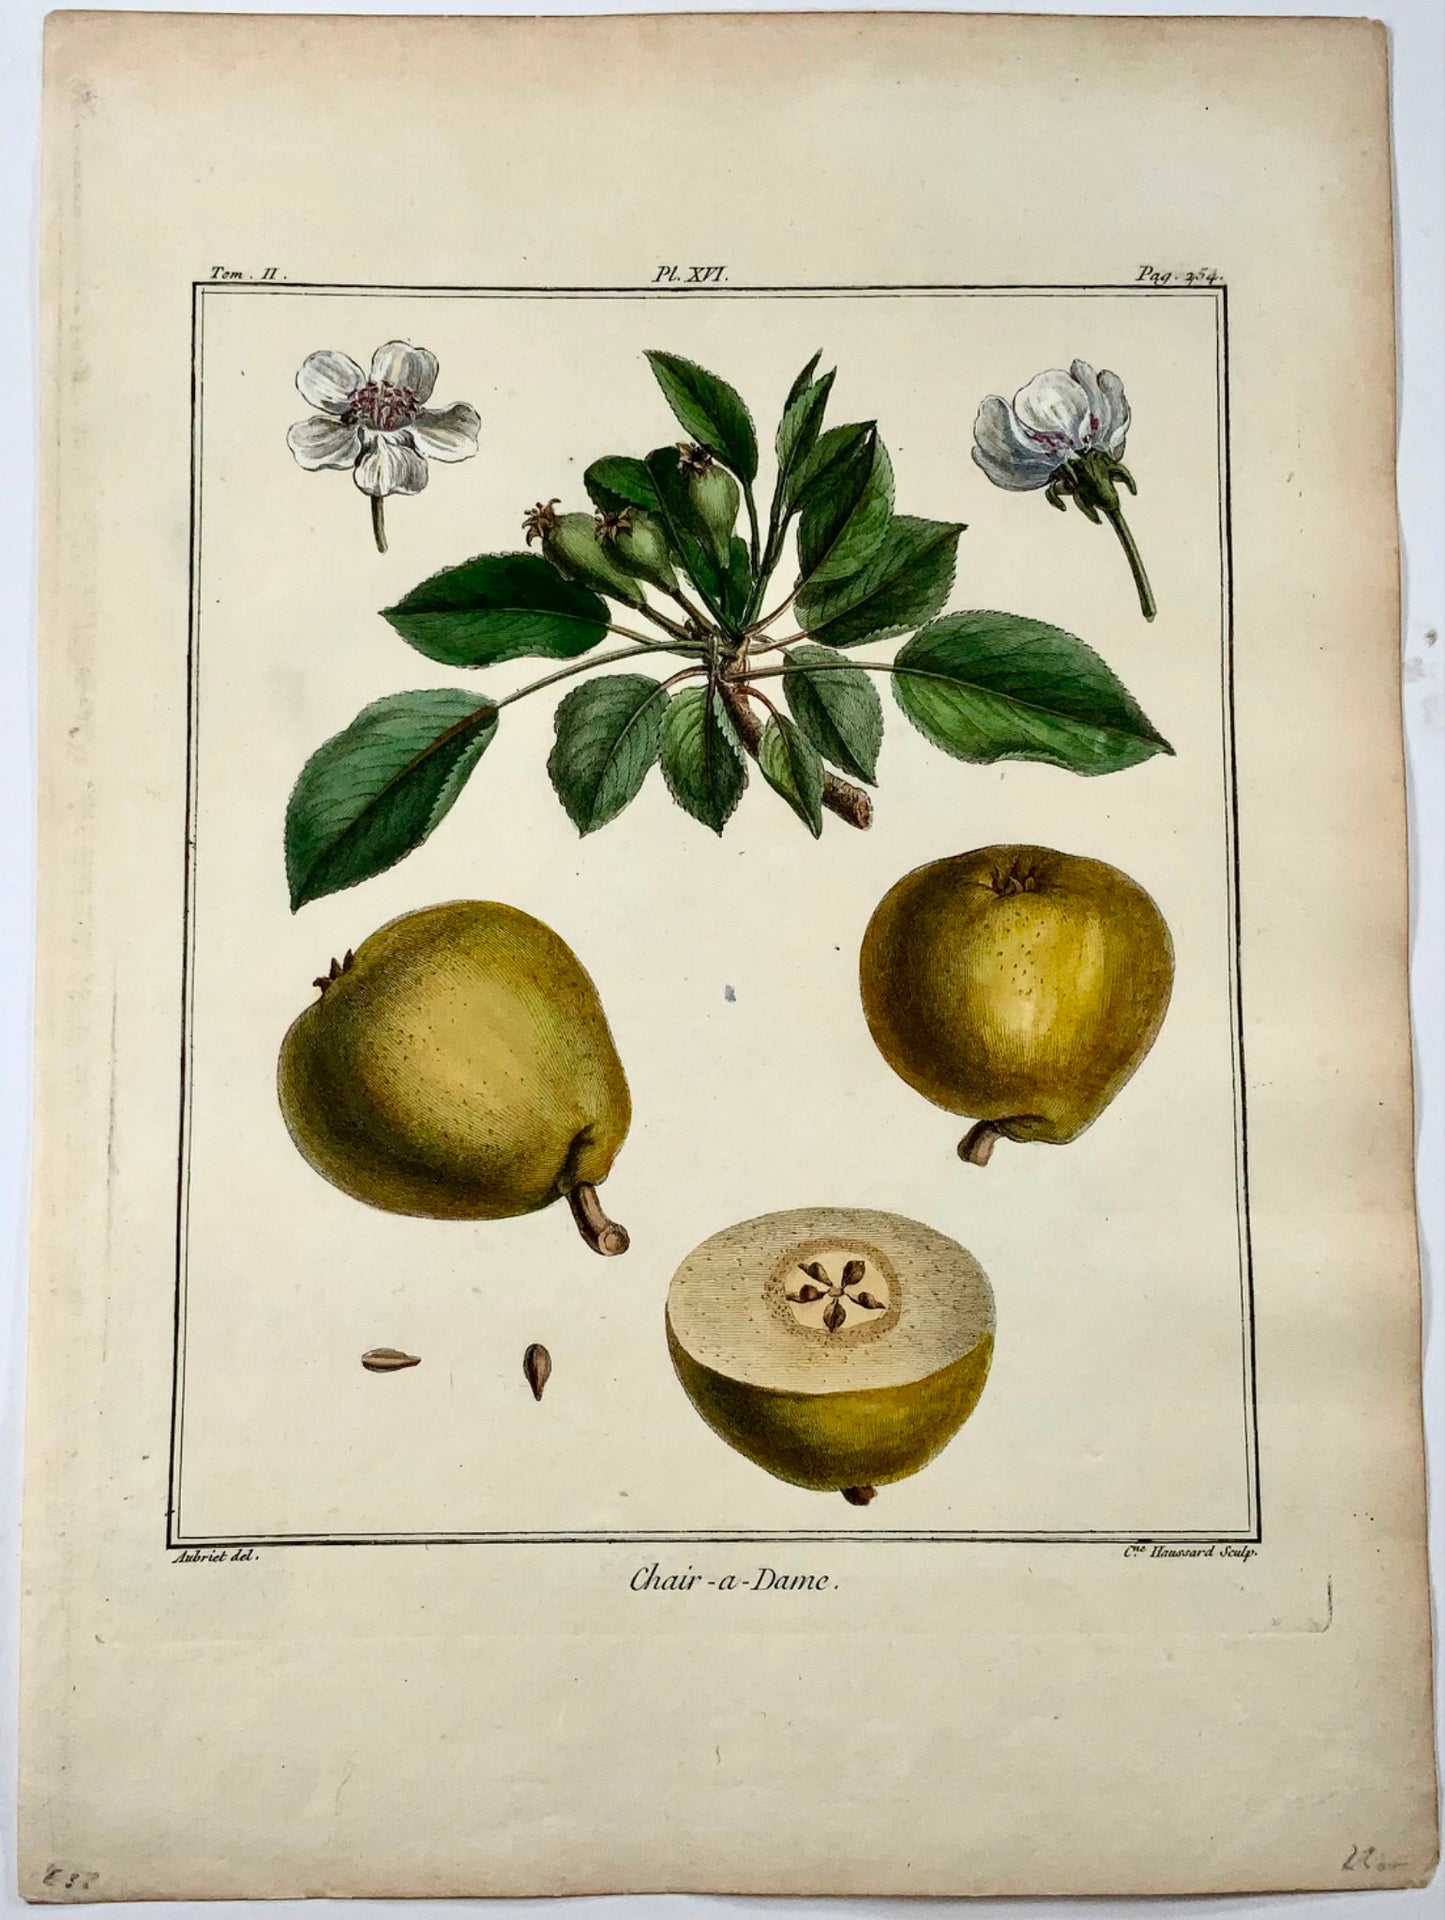 1768 Pera, Clair-Dame, frutta, Duhamel du Monceau, quarto grande, colore a mano, 